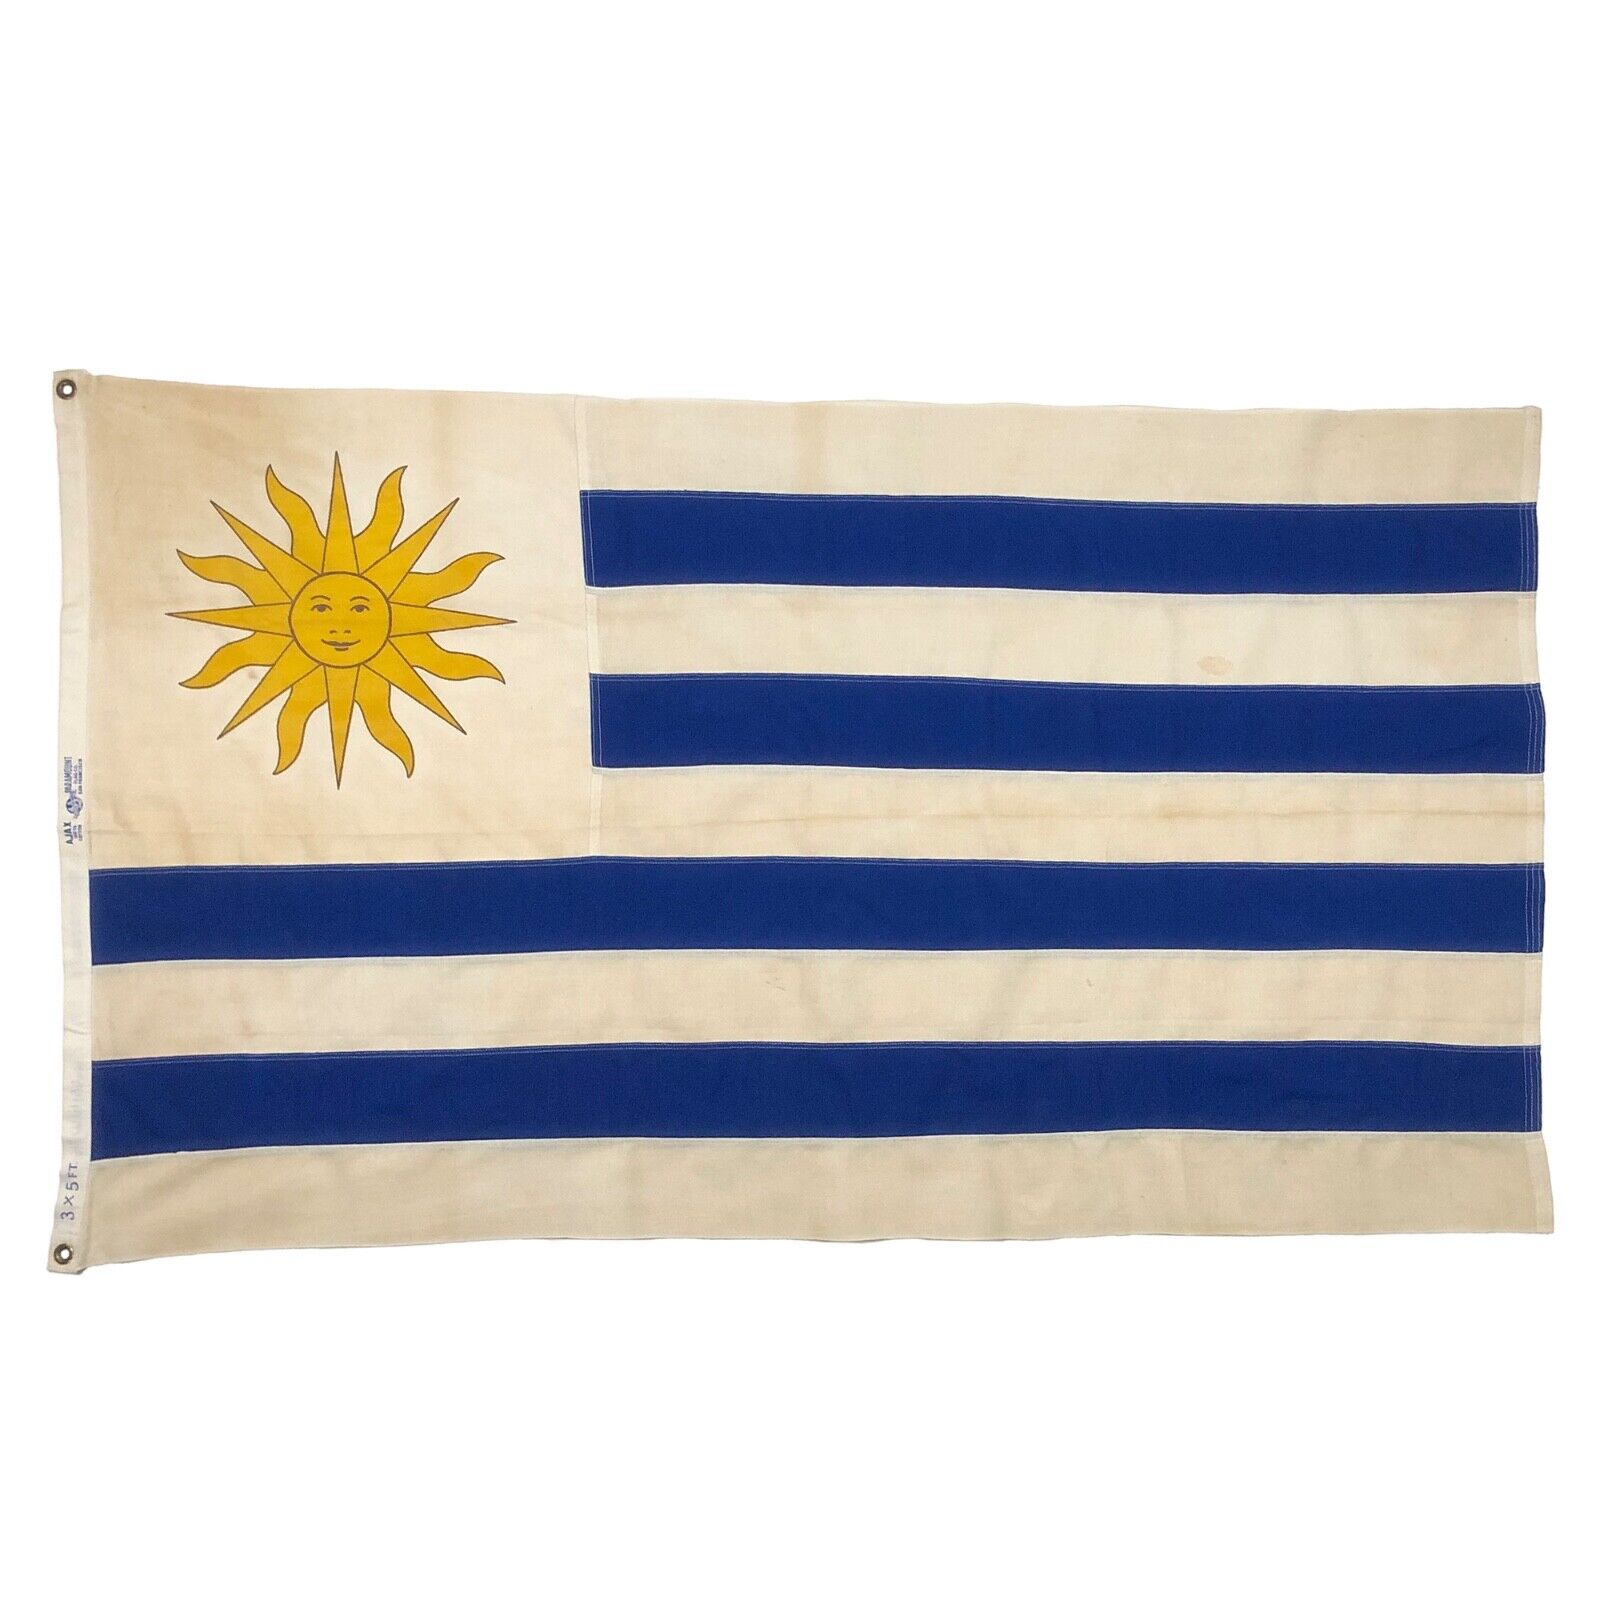 Vintage Sewn Cotton Uruguay Flag Old Sun May World Cloth Textile Art Decor 3x5